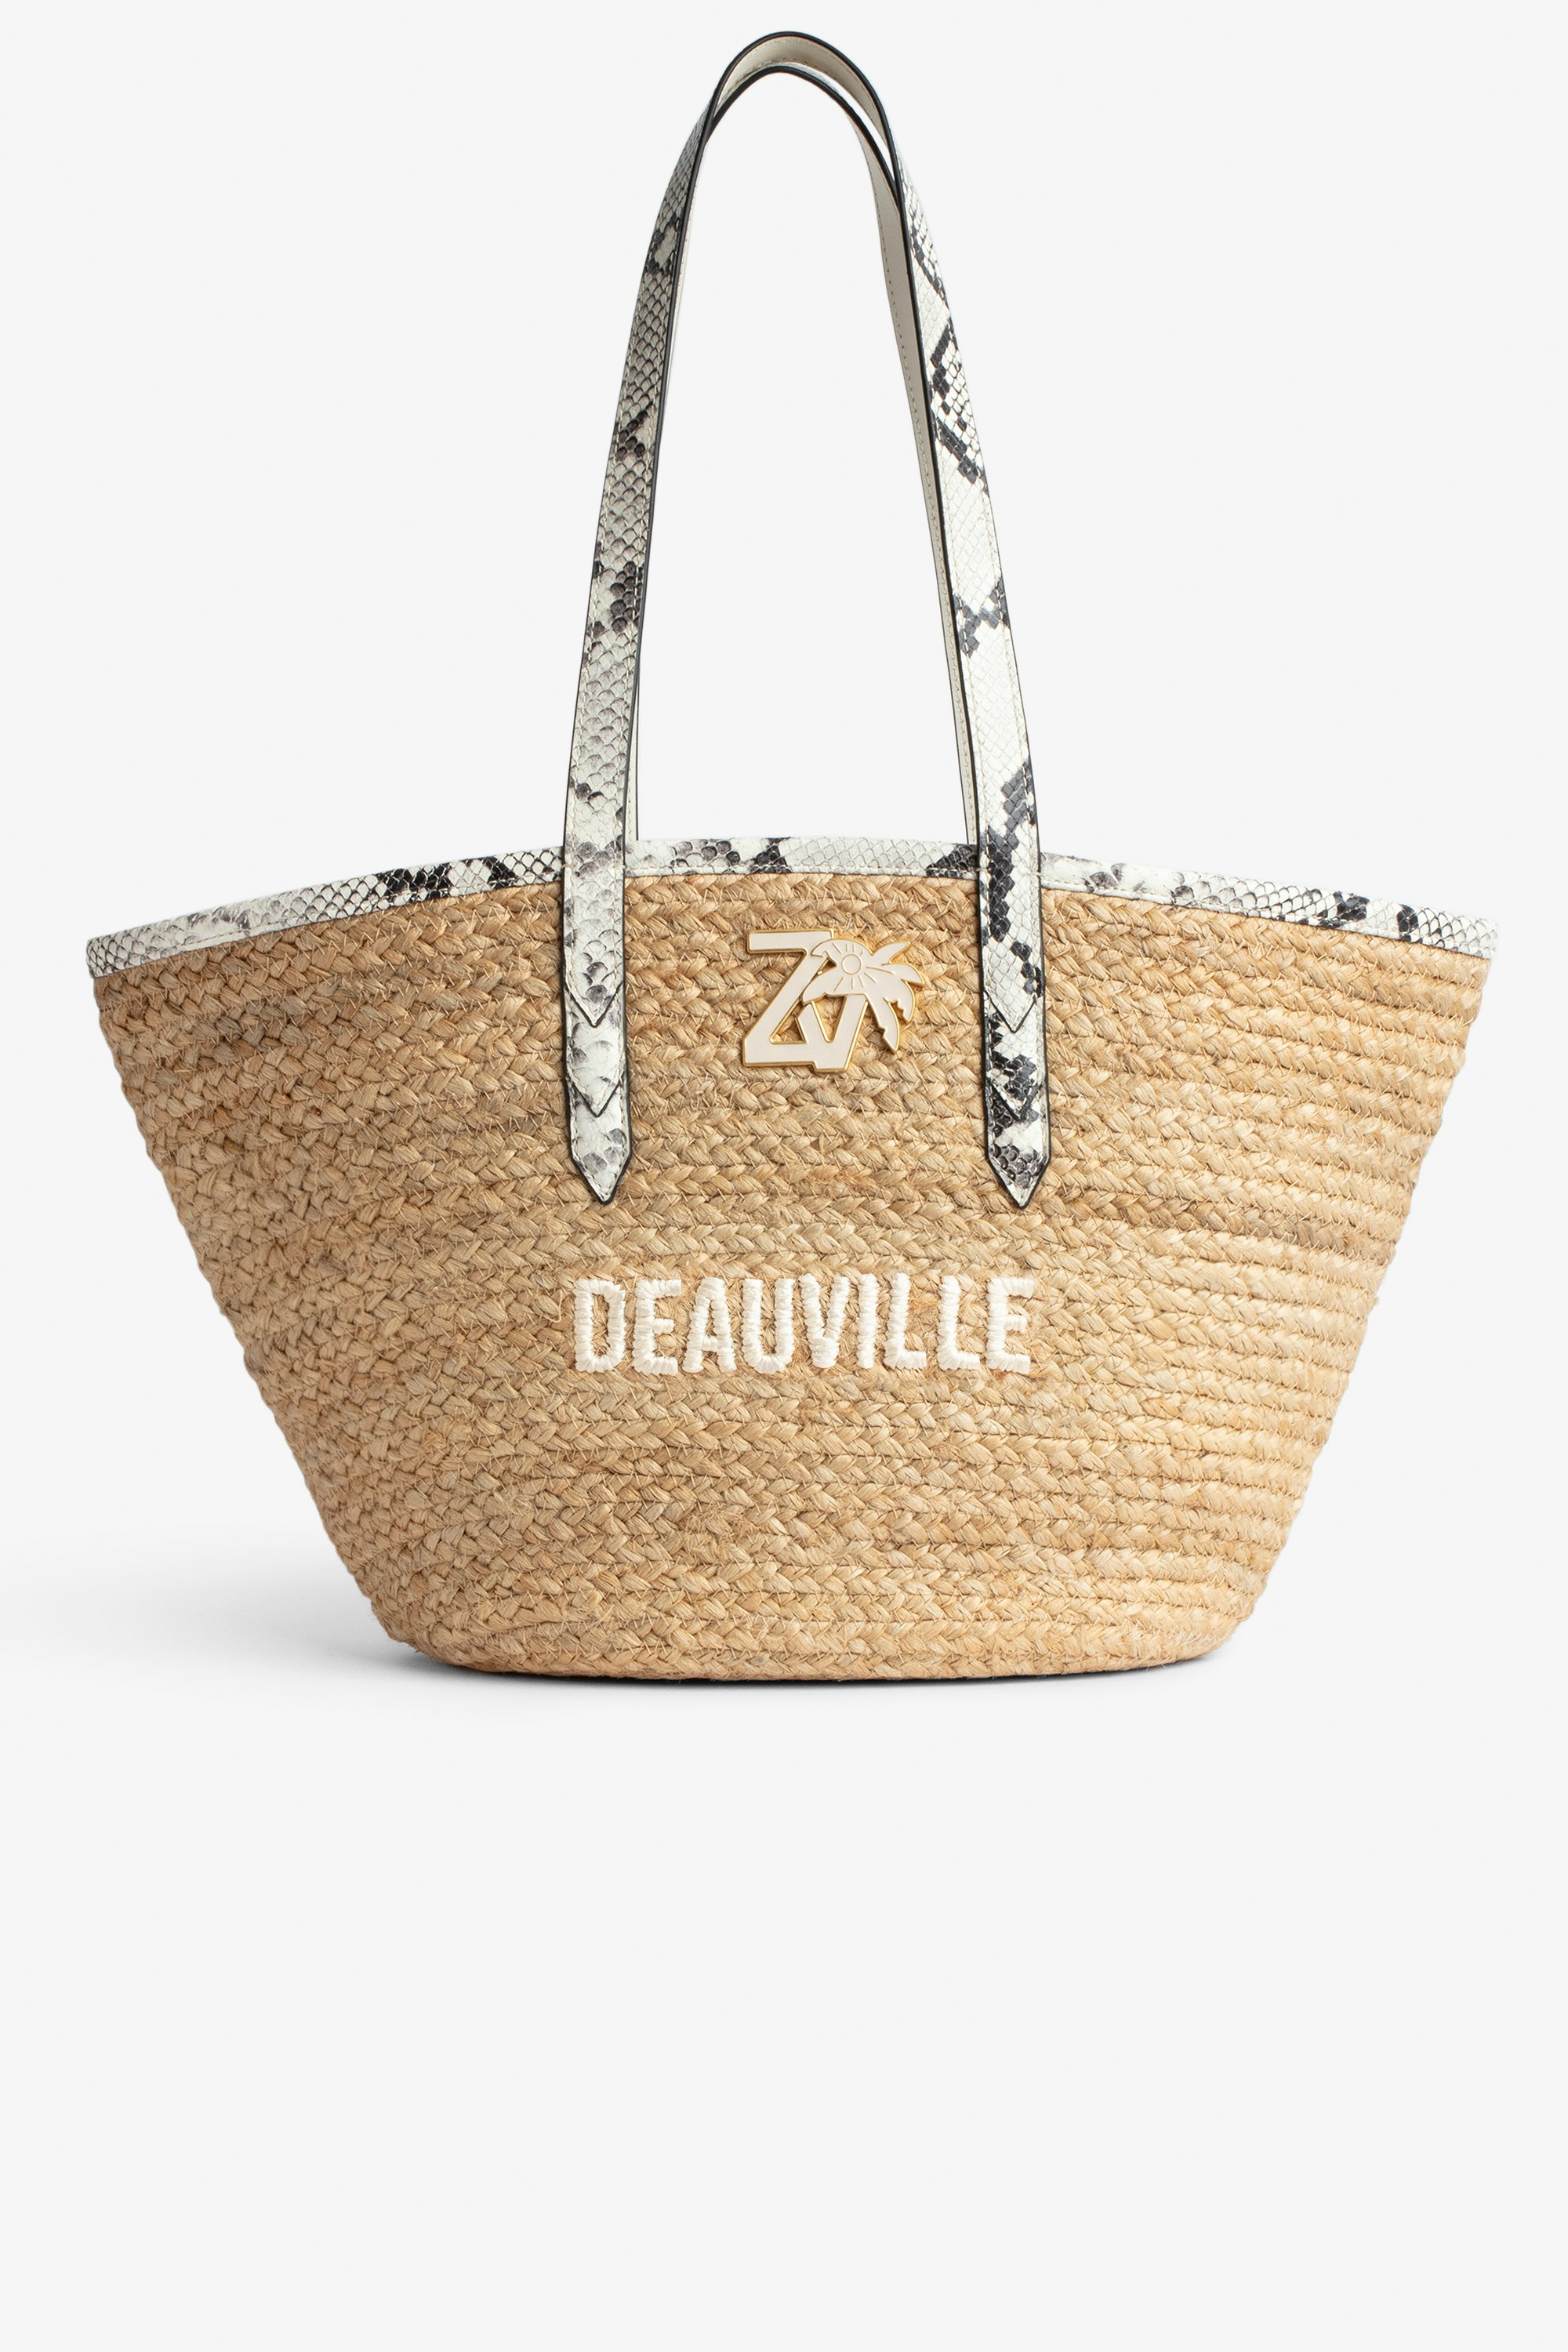 Le Beach Bag パイソンエフェクト エクリュレザーハンドル付きストローバッグ、「Deauville」刺繍入り ZVチャーム レディース